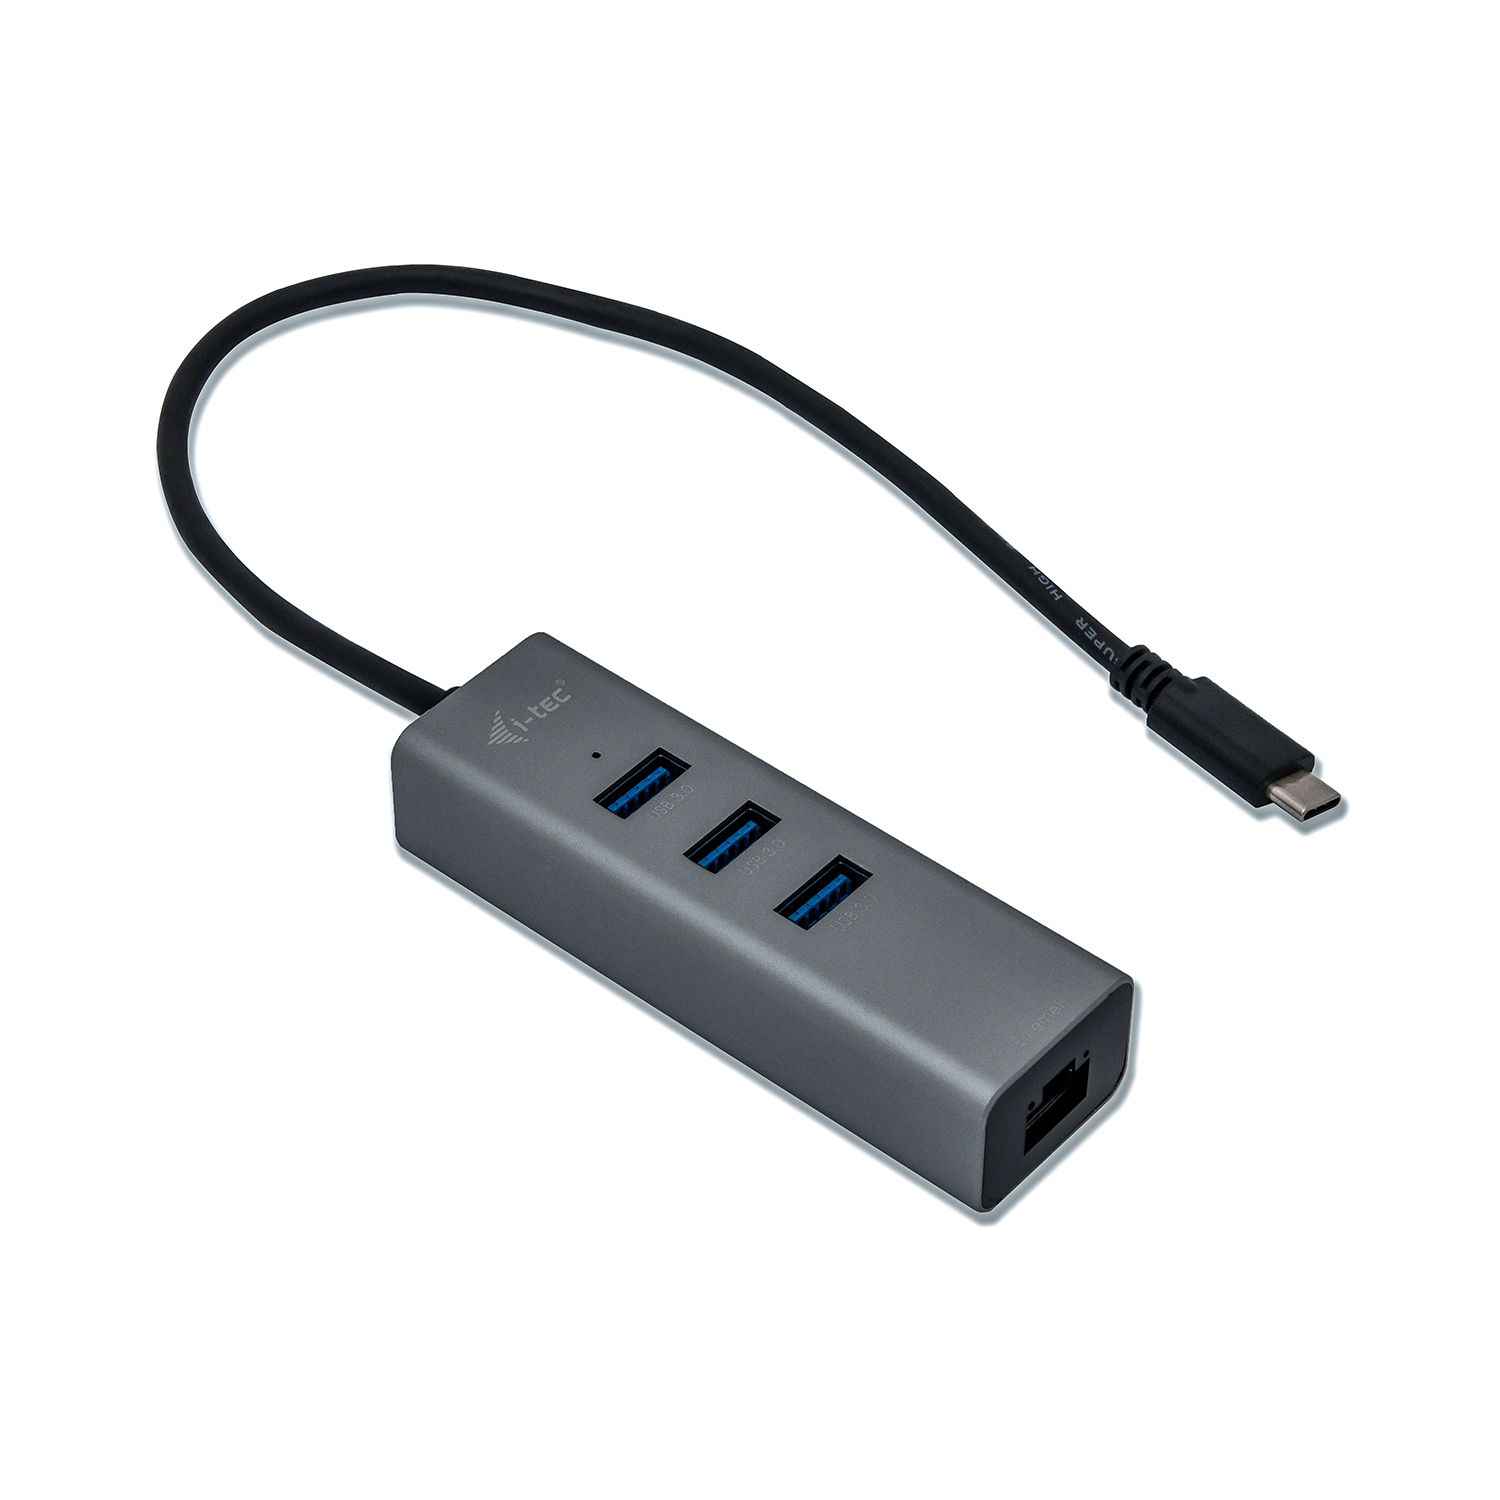 i-tec USB-C Metal HUB 3 Port + Gigabit Ethernet 